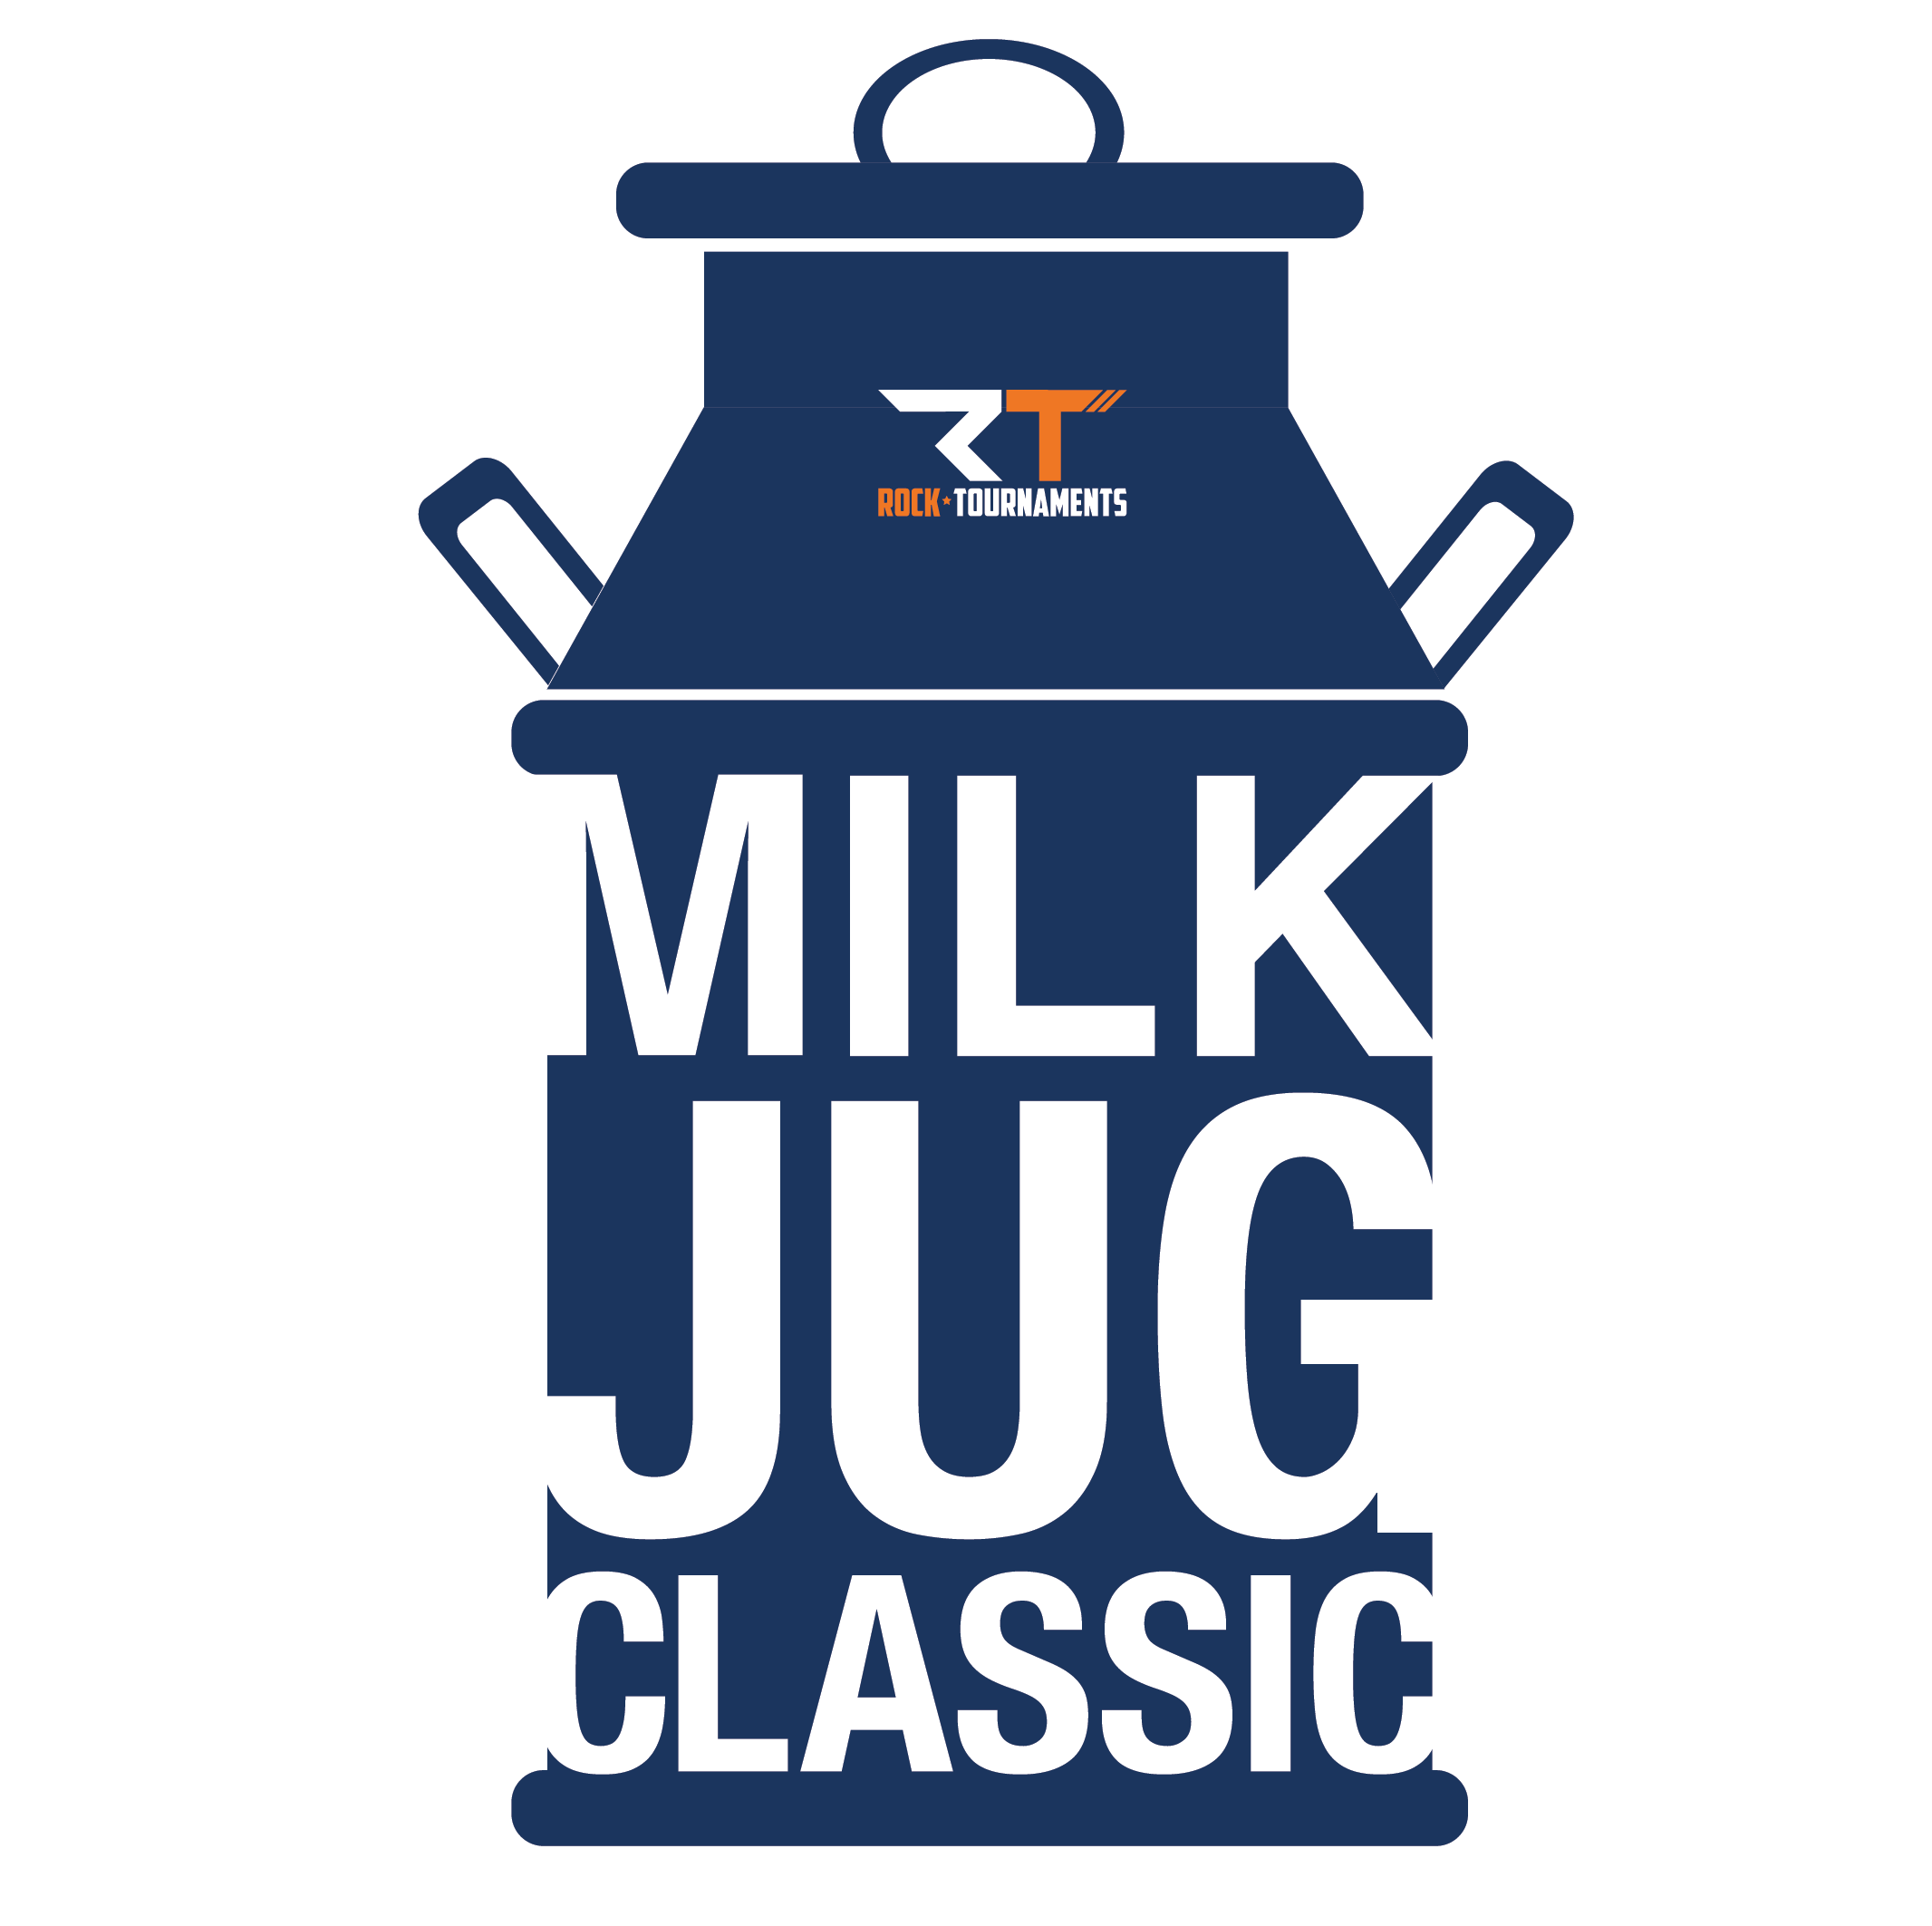 Milk Jug Classic